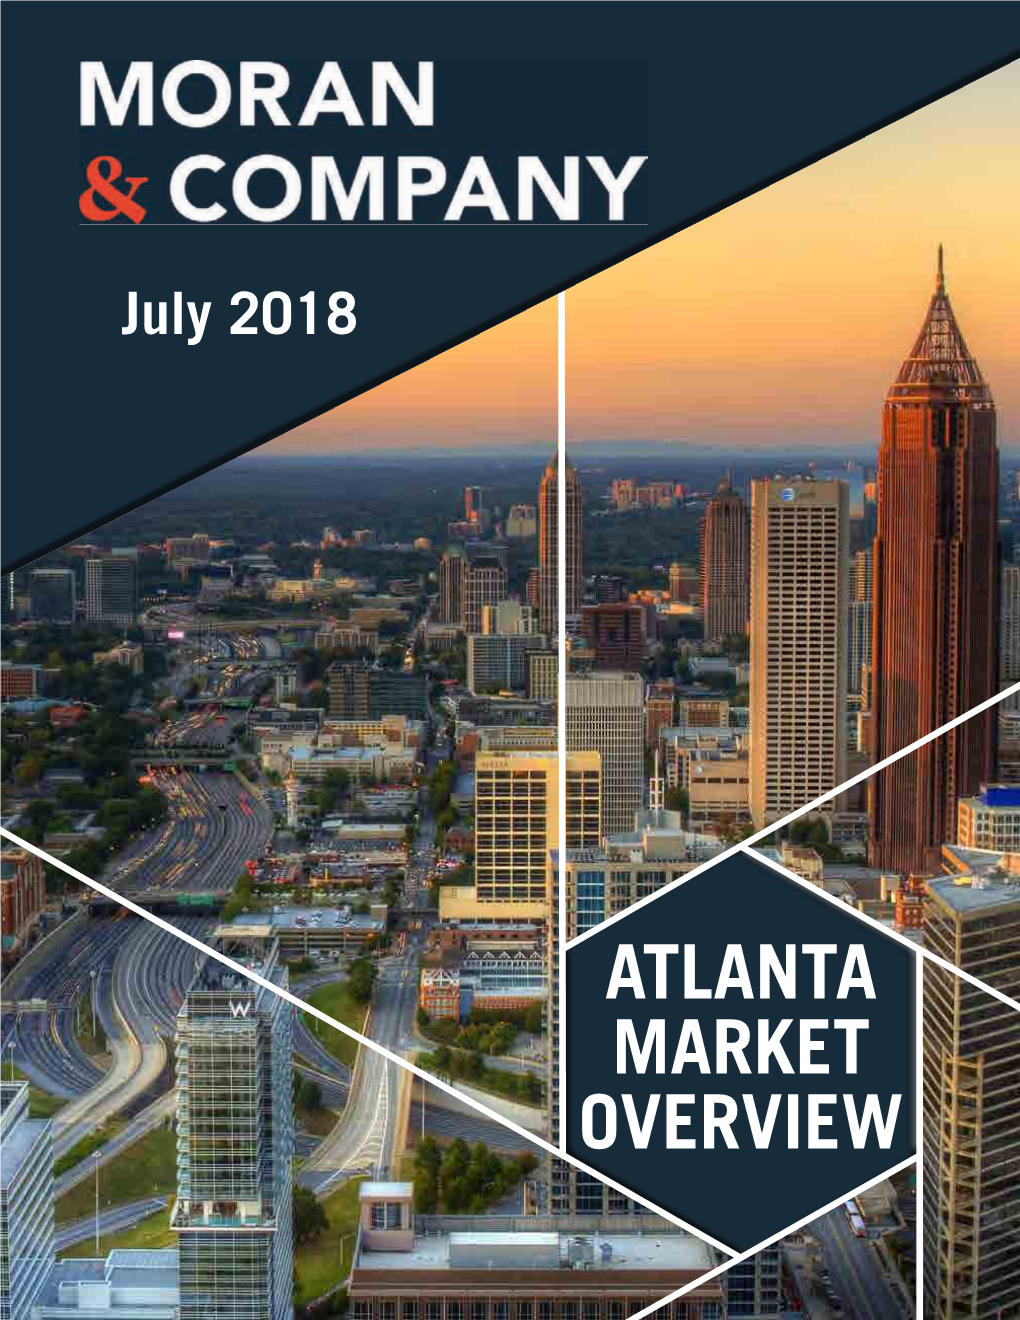 Atlanta Market Overview Introduction